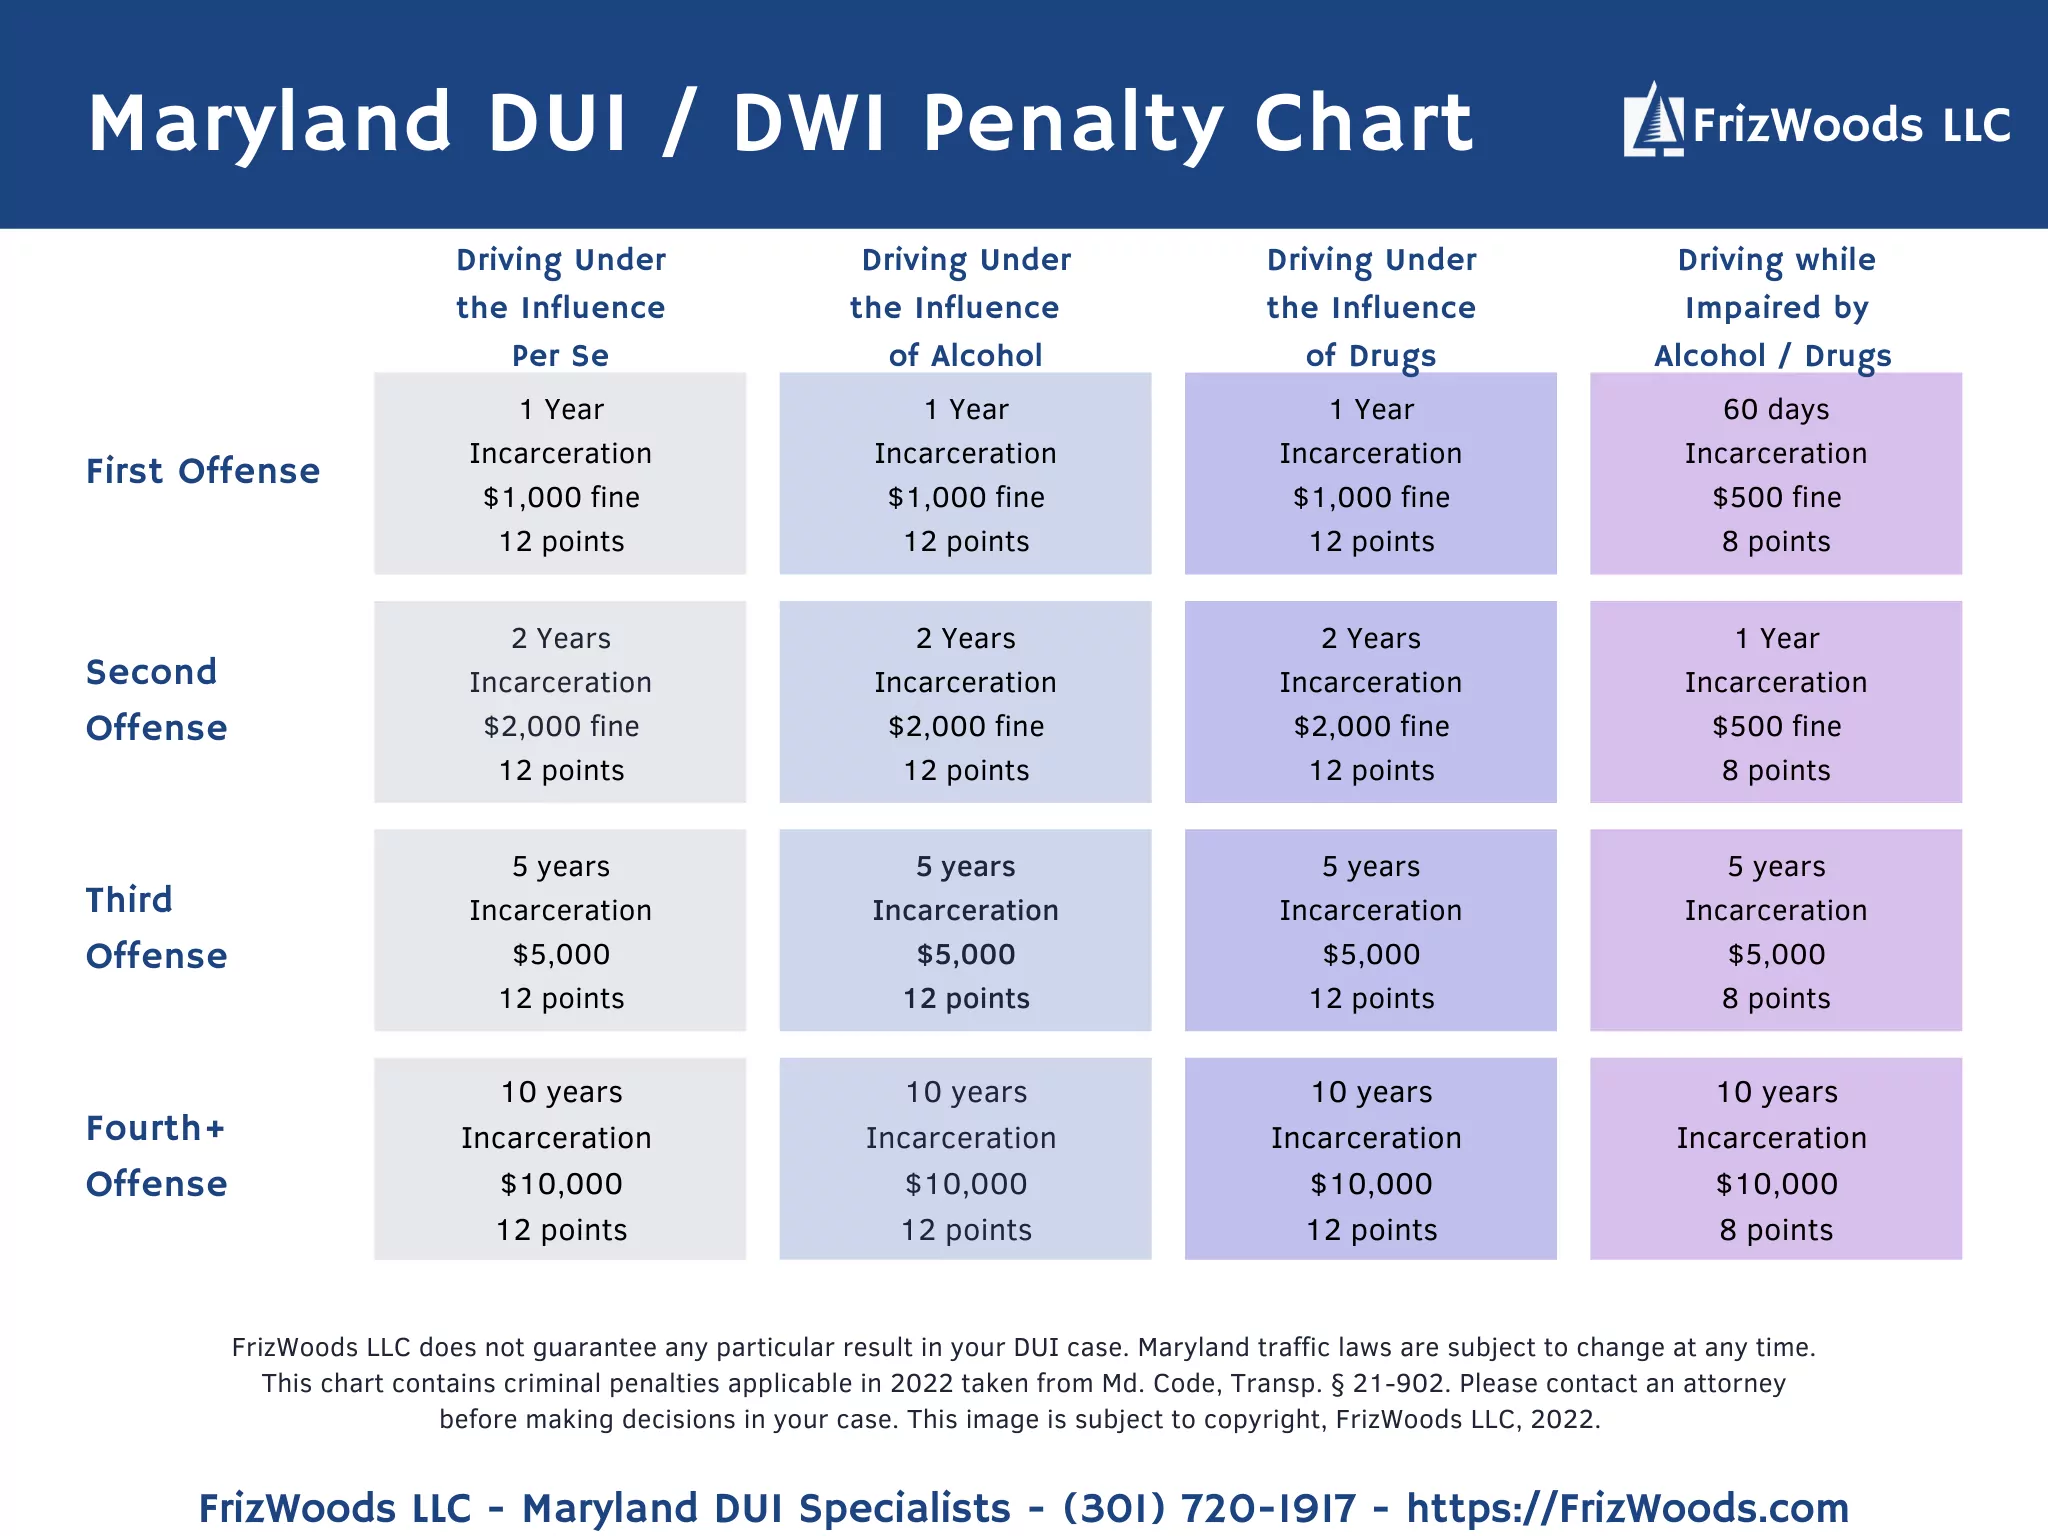 Maryland DUI penalties